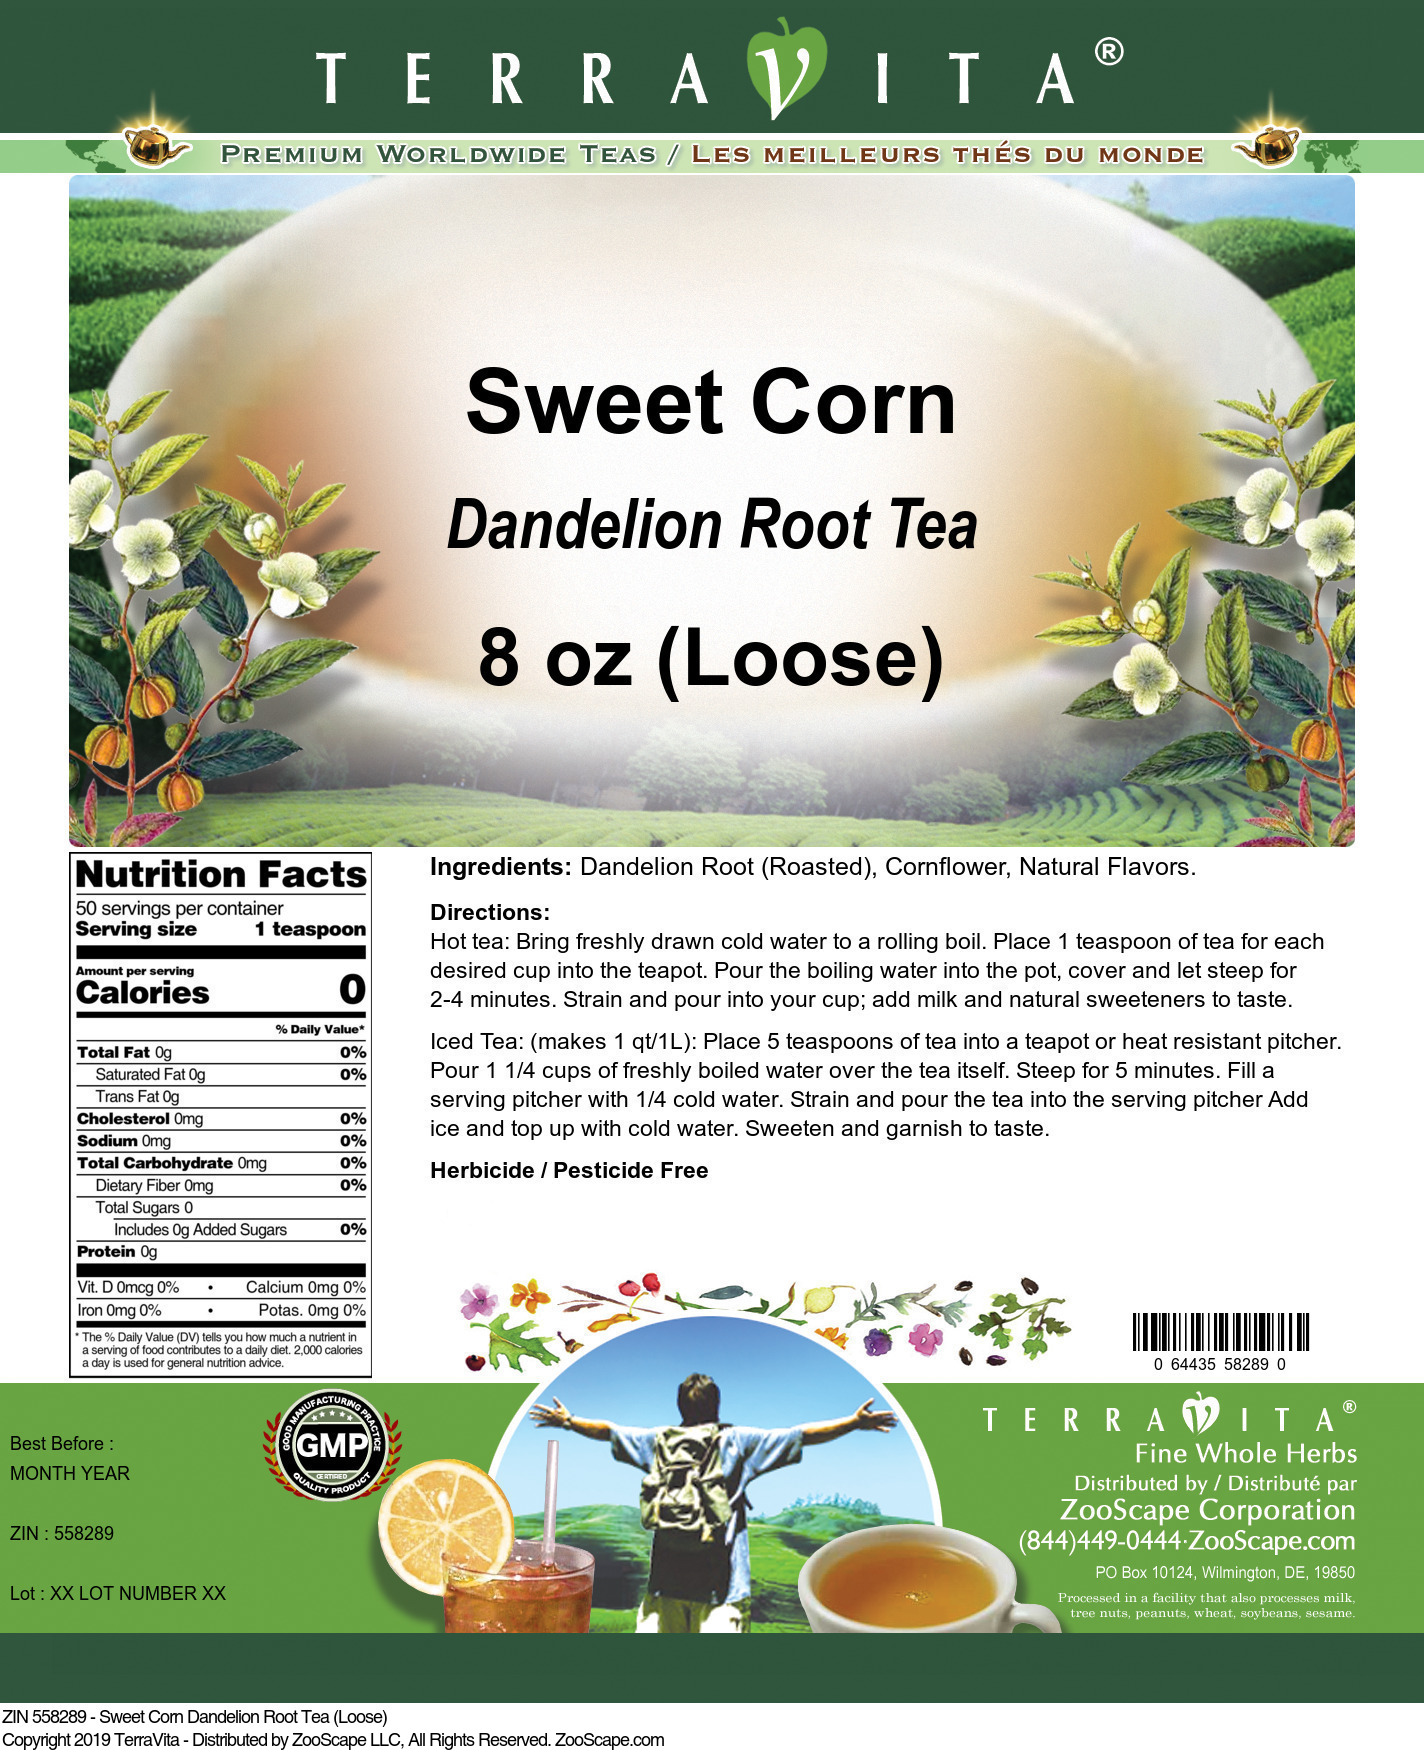 Sweet Corn Dandelion Root Tea (Loose) - Label